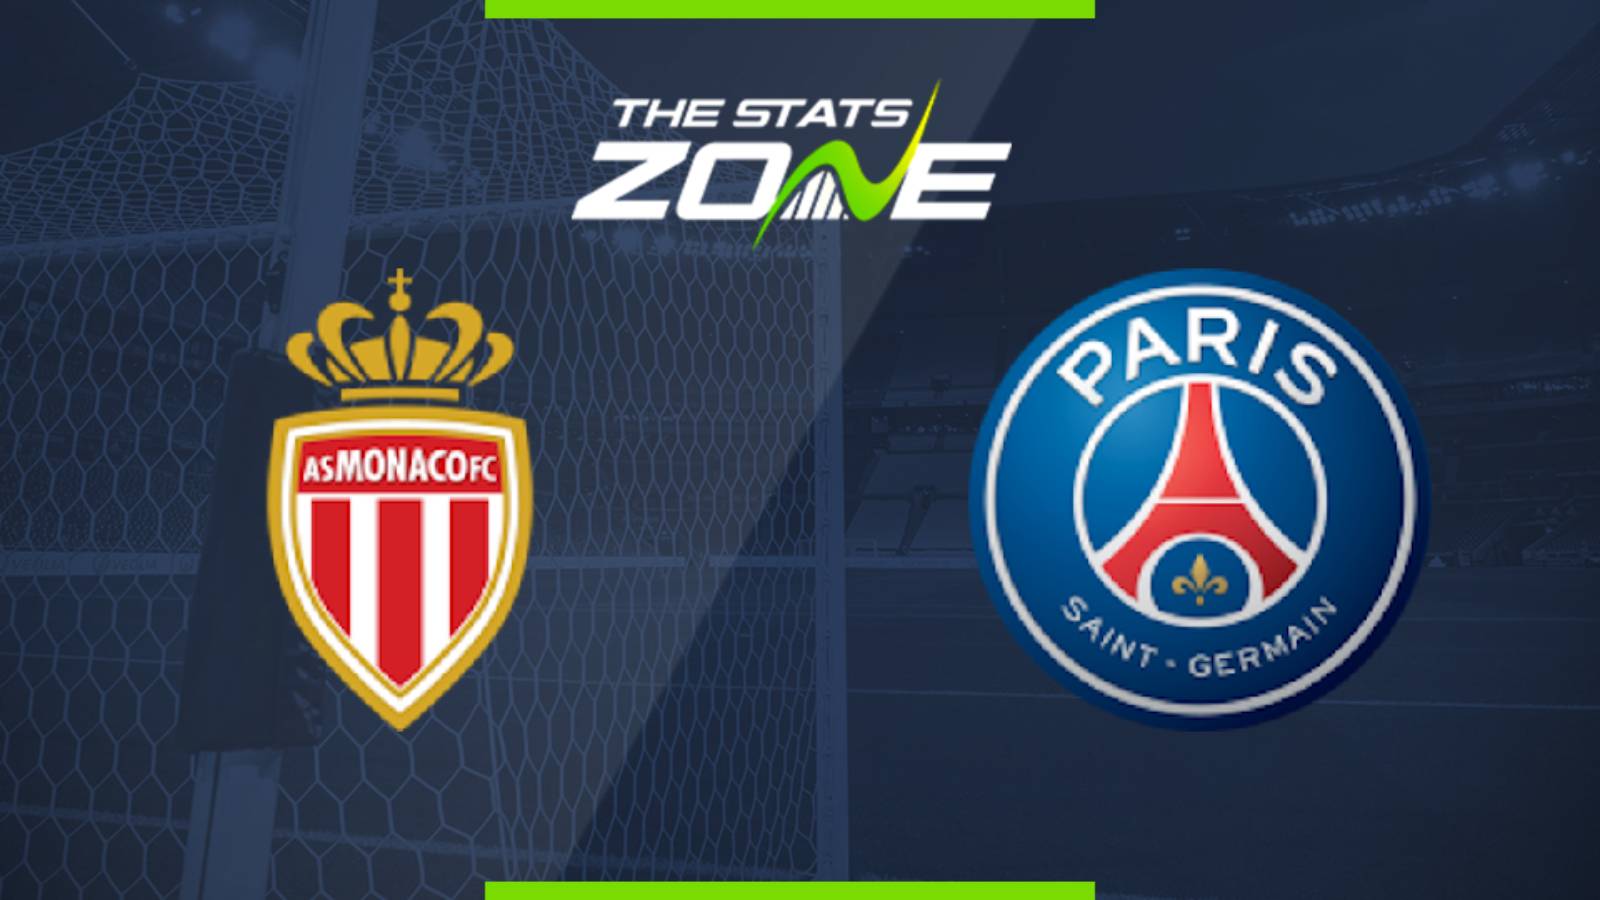 201920 Ligue 1 – Monaco vs PSG Preview & Prediction  The Stats Zone